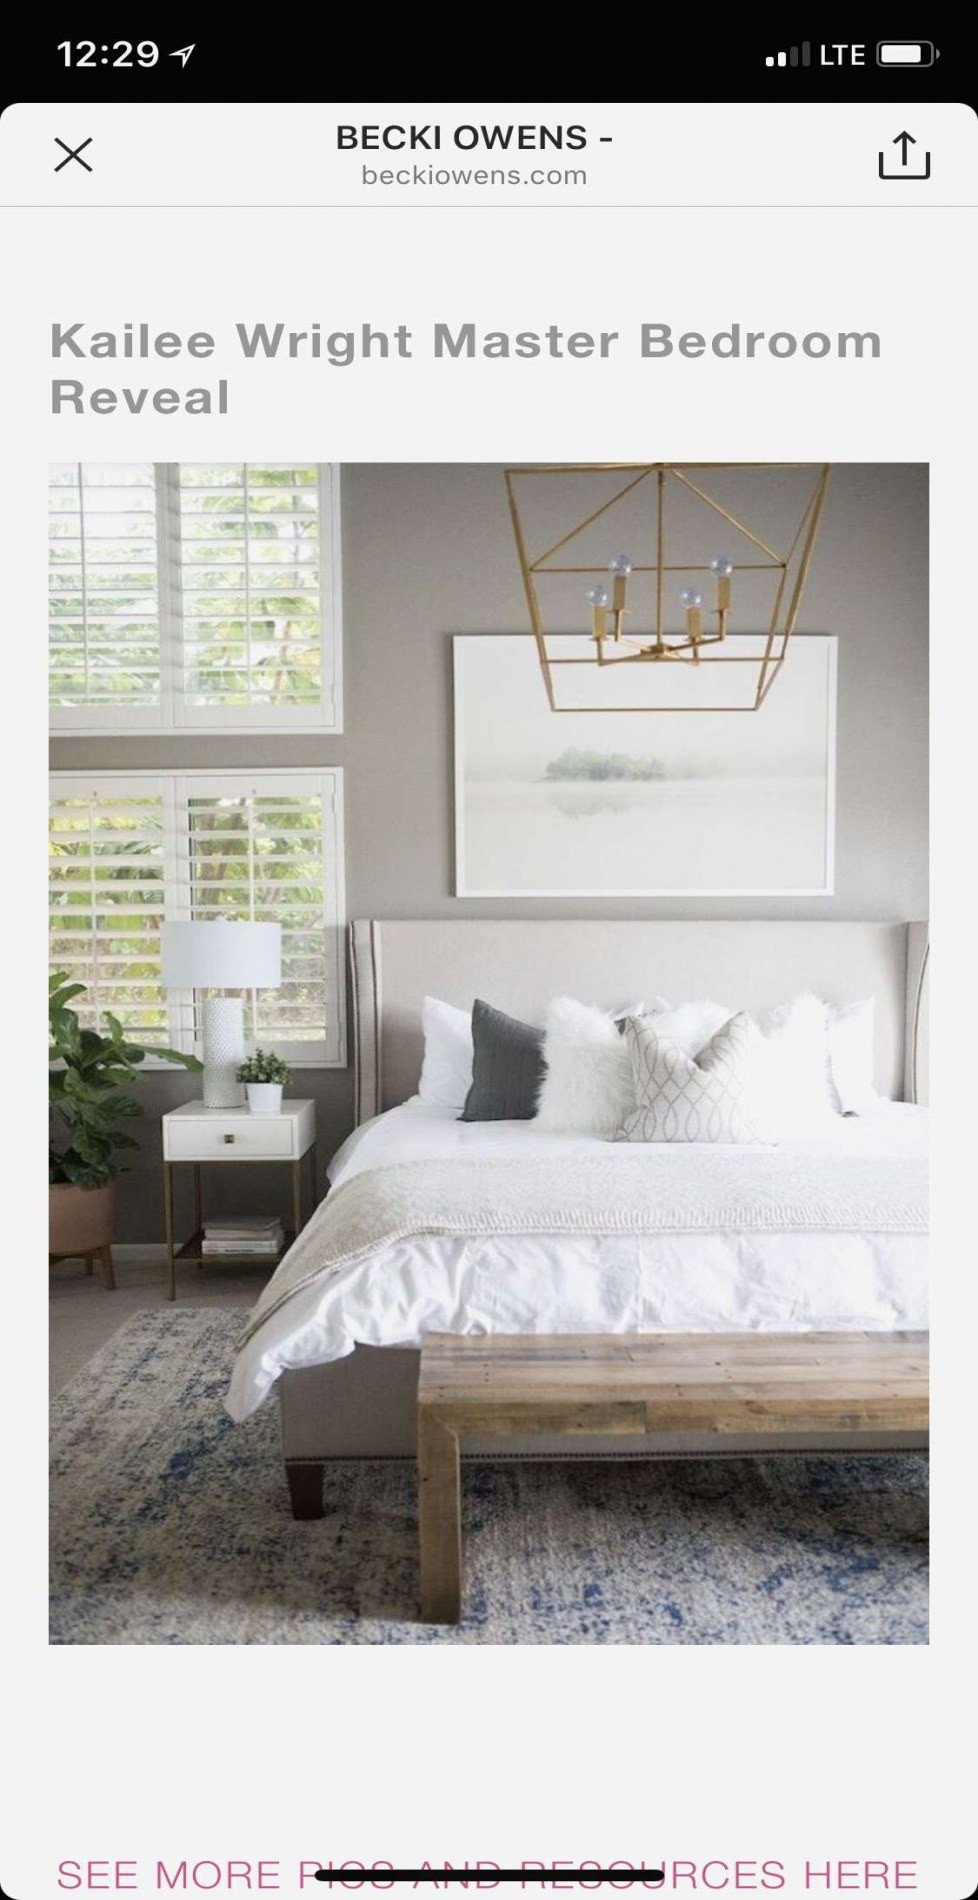 Luxury Master Bedroom Furniture Inspirational Light Bedroom Colors 46 Luxury High End Master Bedroom Ideas